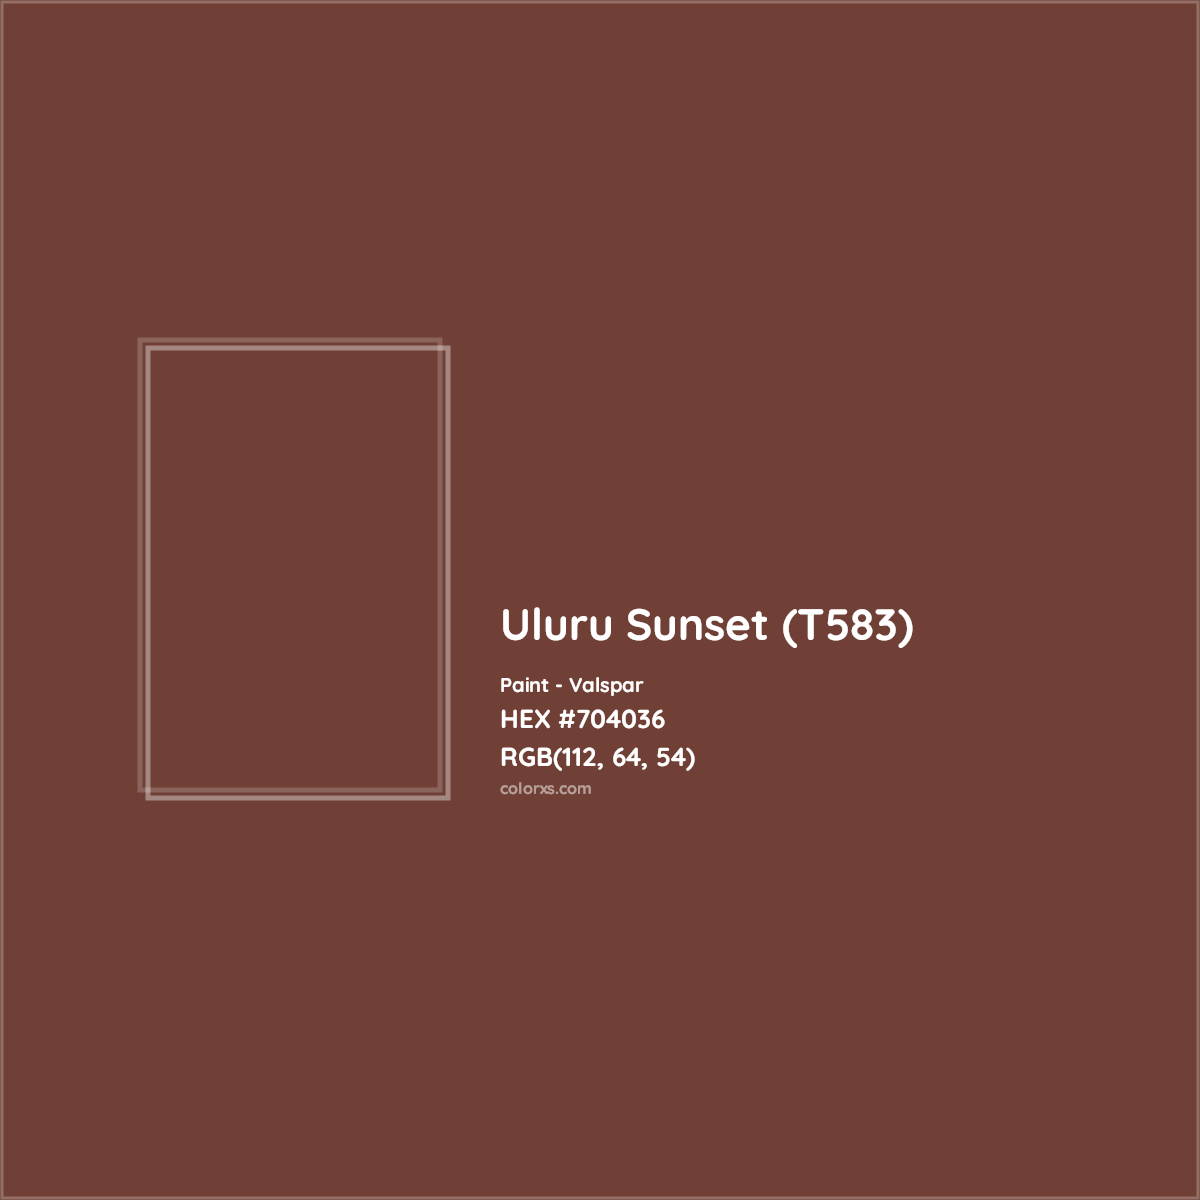 HEX #704036 Uluru Sunset (T583) Paint Valspar - Color Code